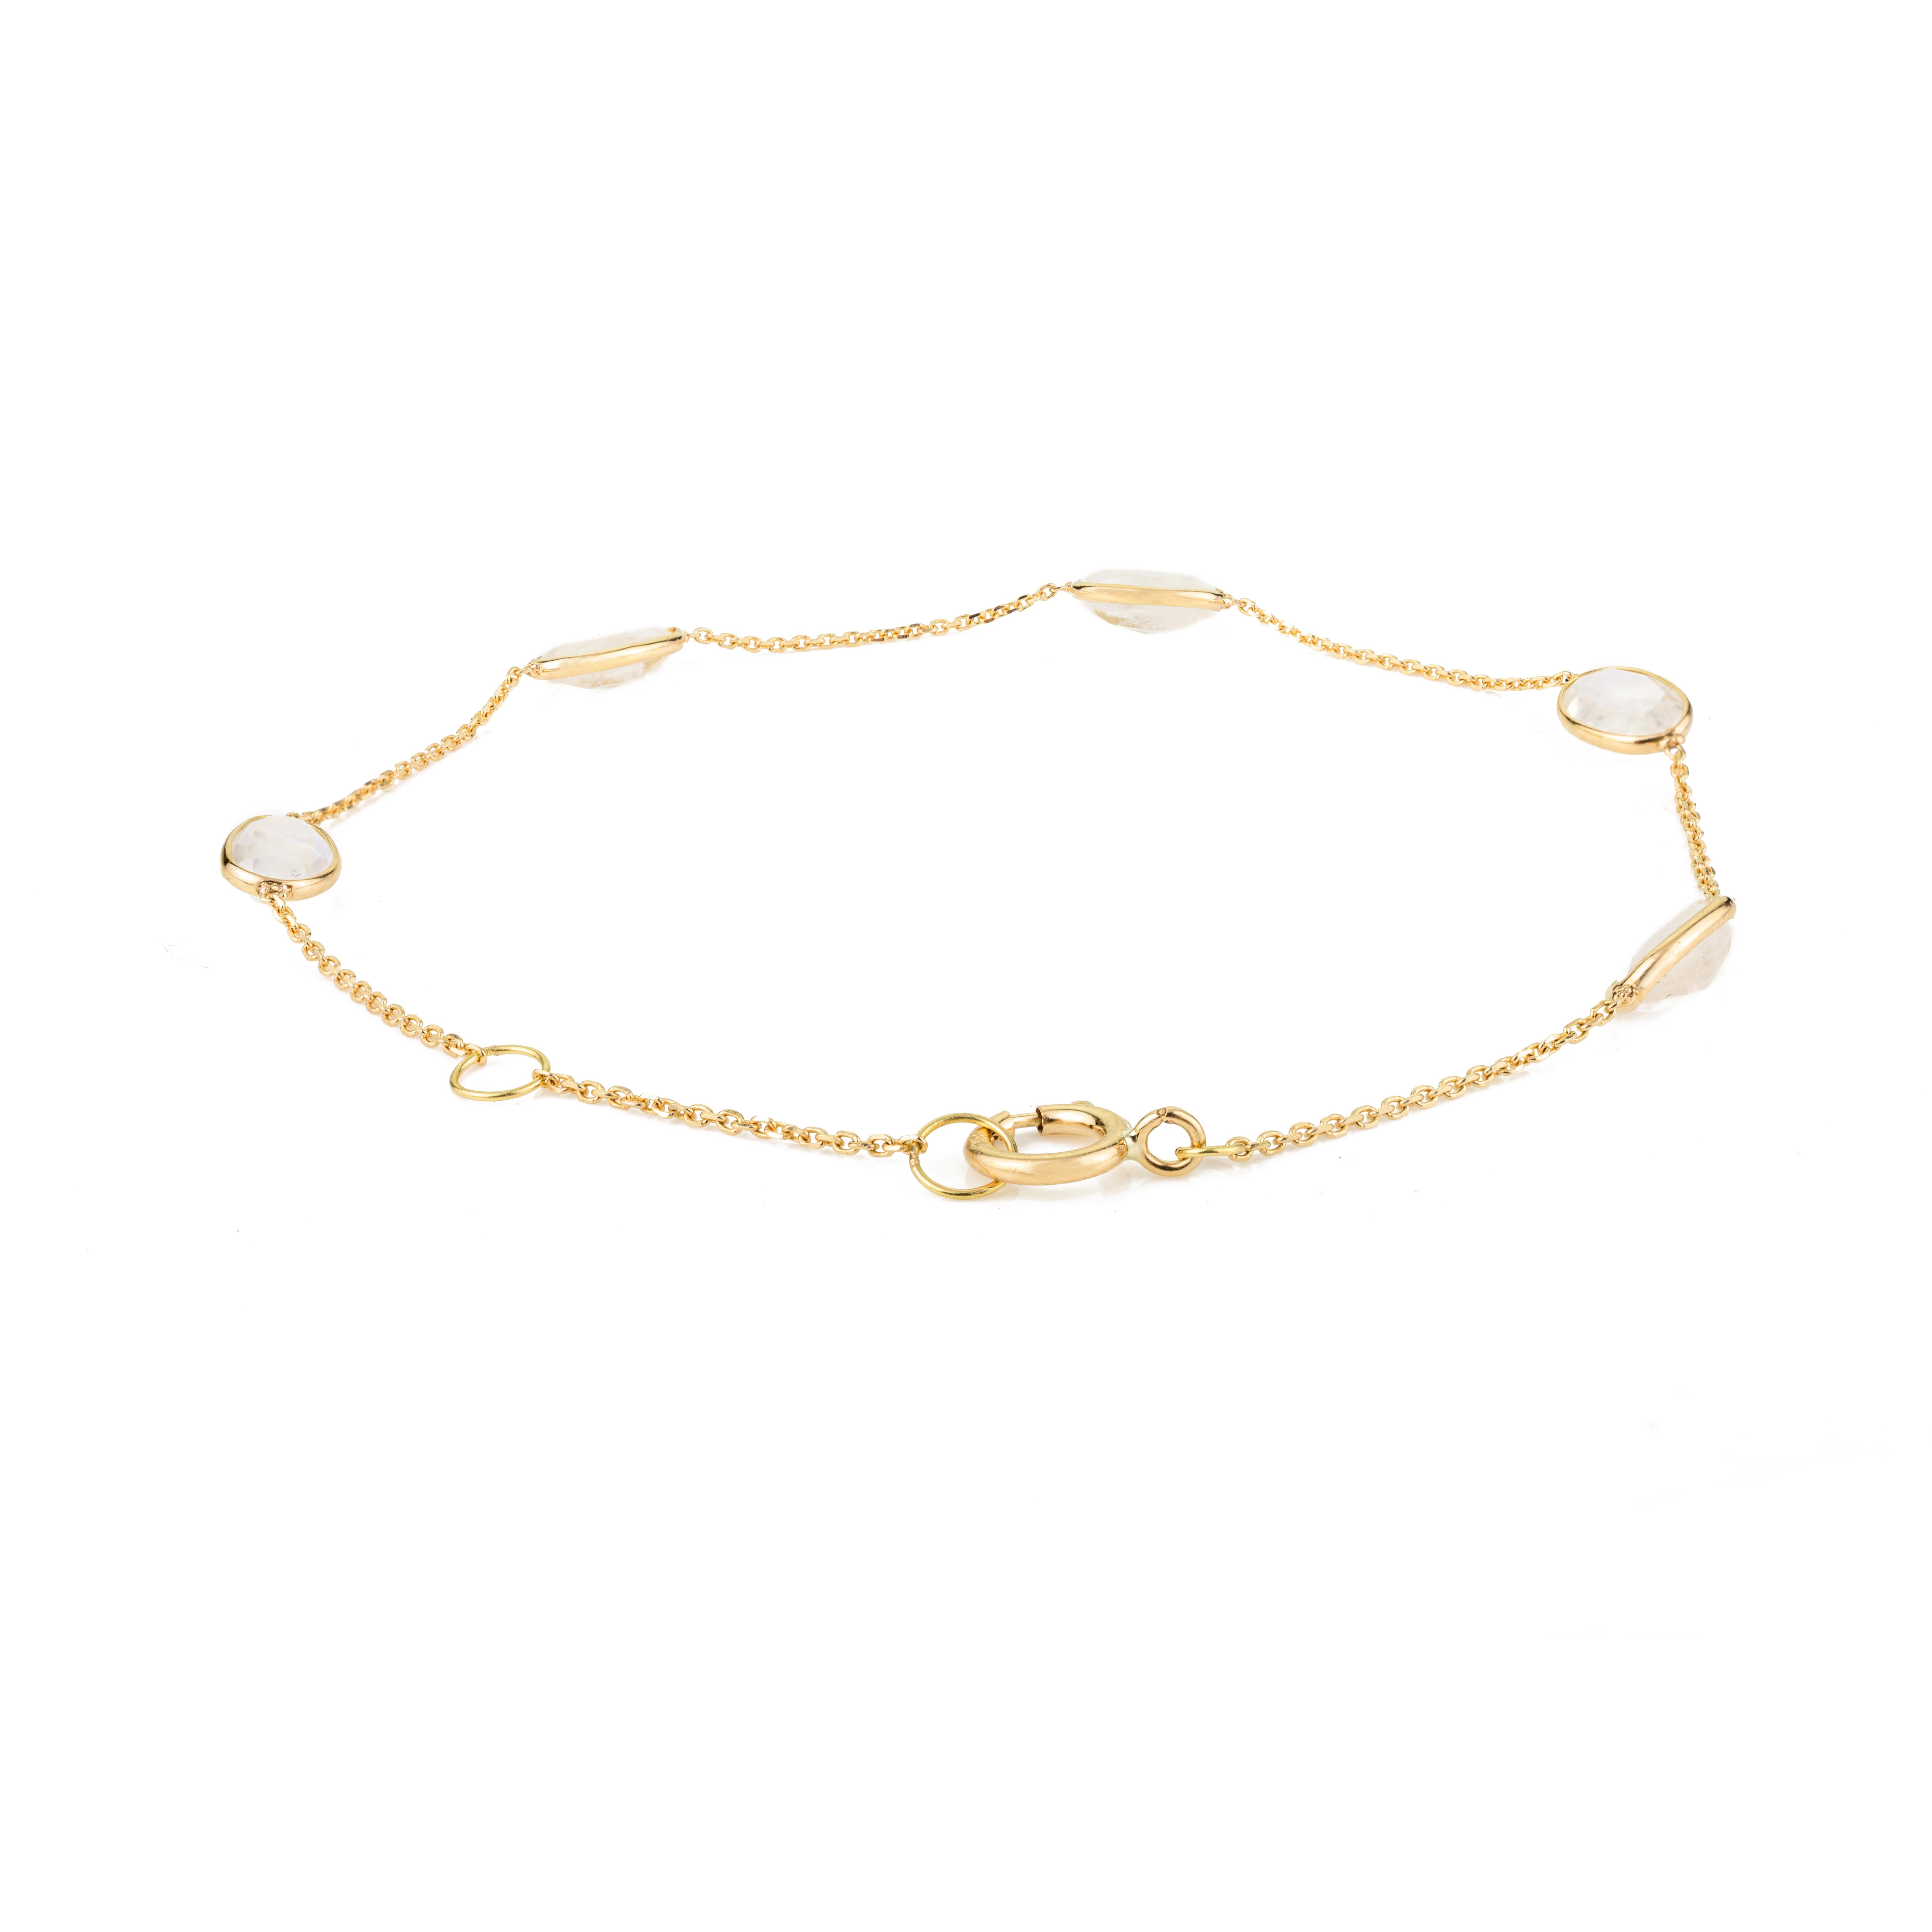 Minimal June Birthstone Moonstone Chain Bracelet in 18k Yellow Gold For Sale 1